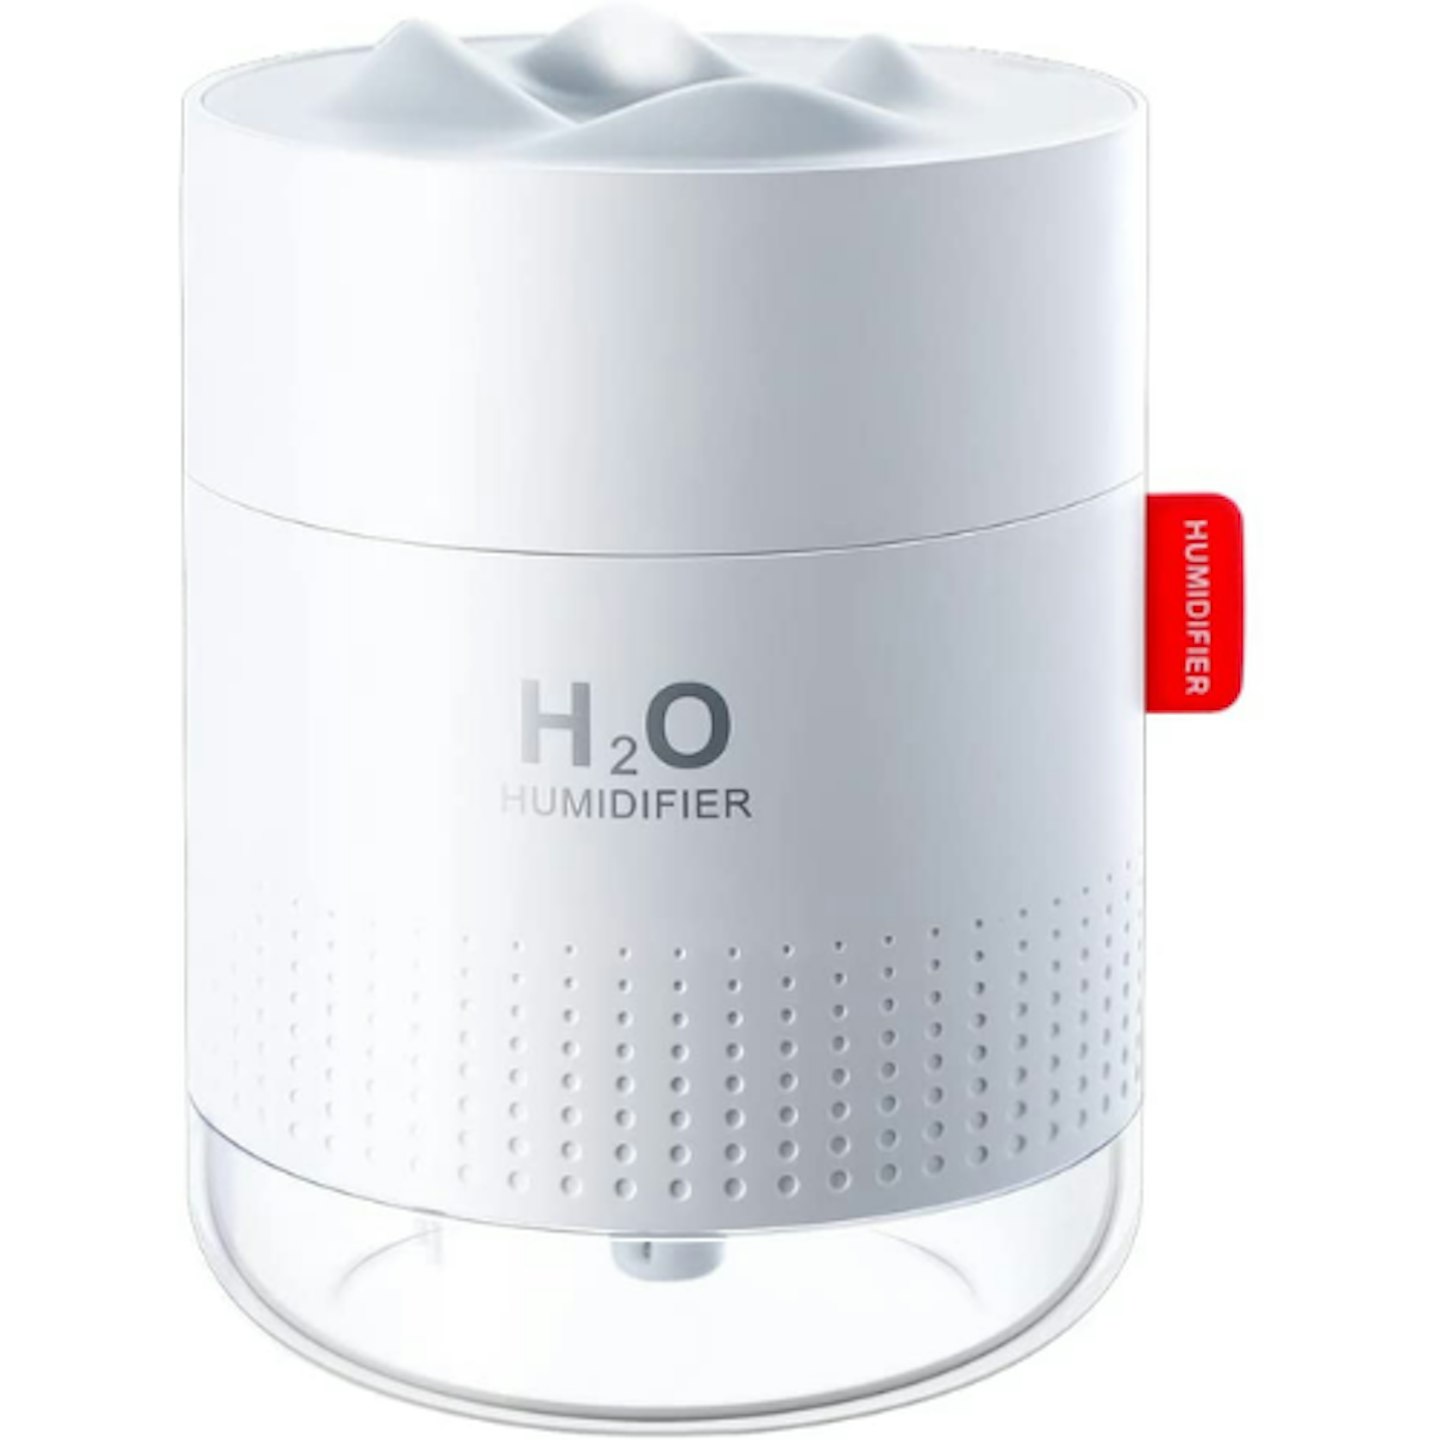 Vintoney H2O Humidifier